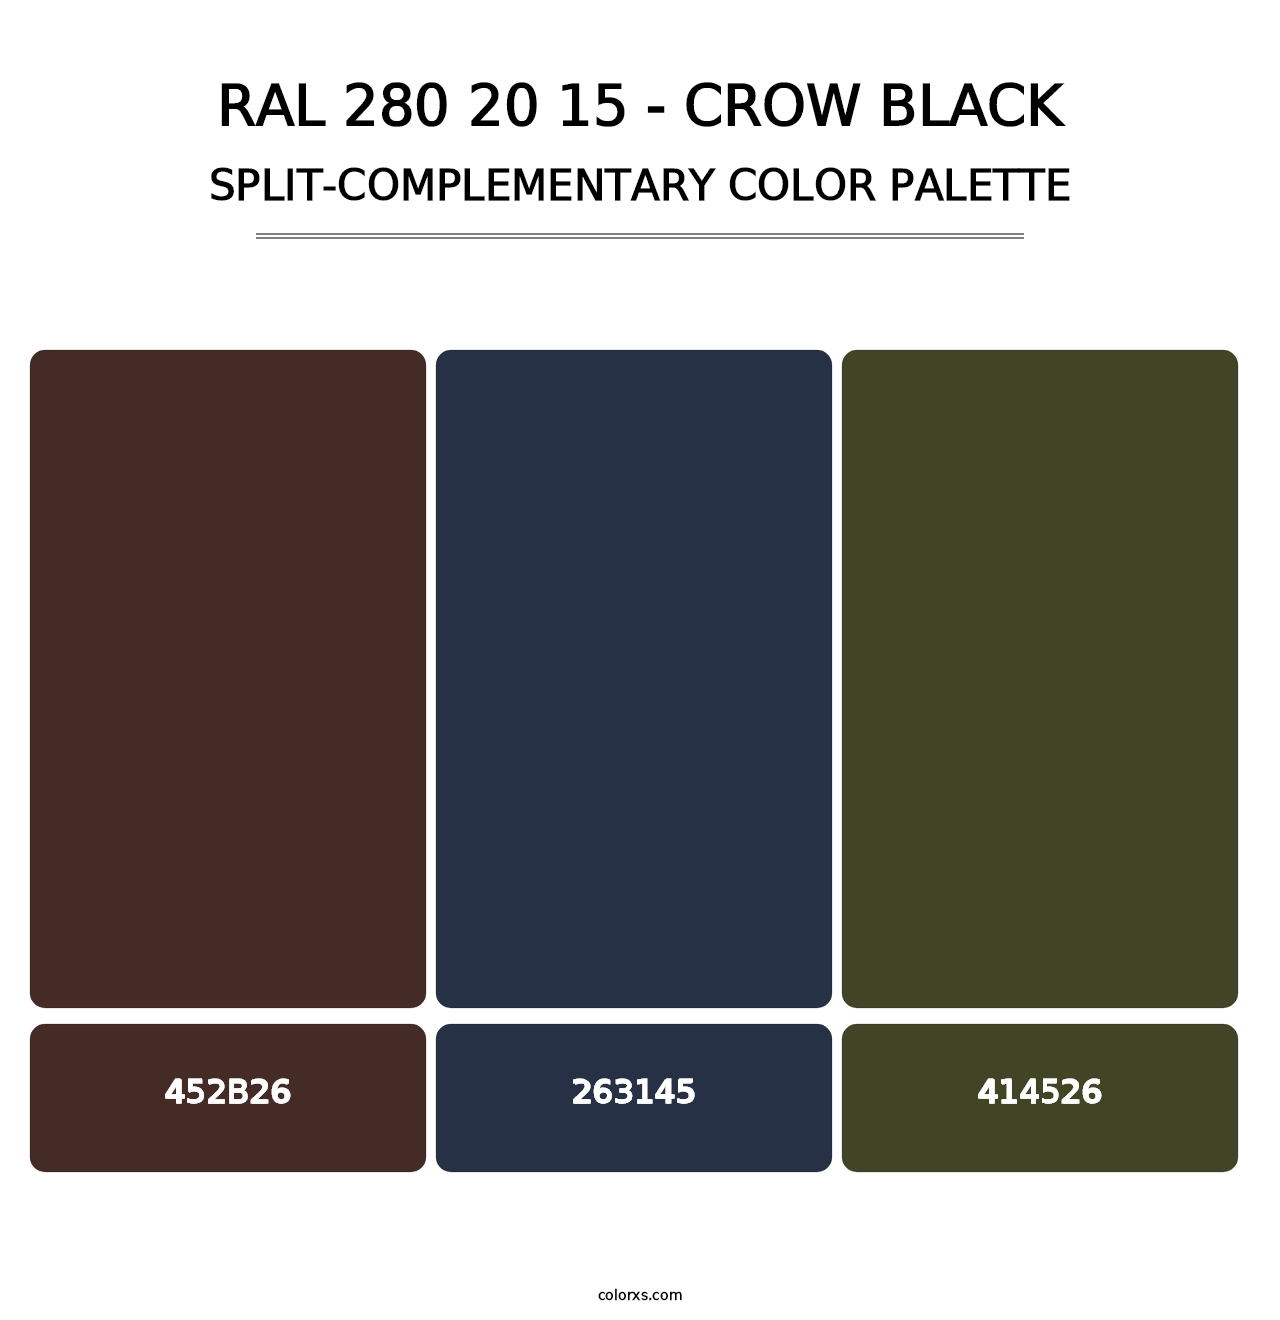 RAL 280 20 15 - Crow Black - Split-Complementary Color Palette